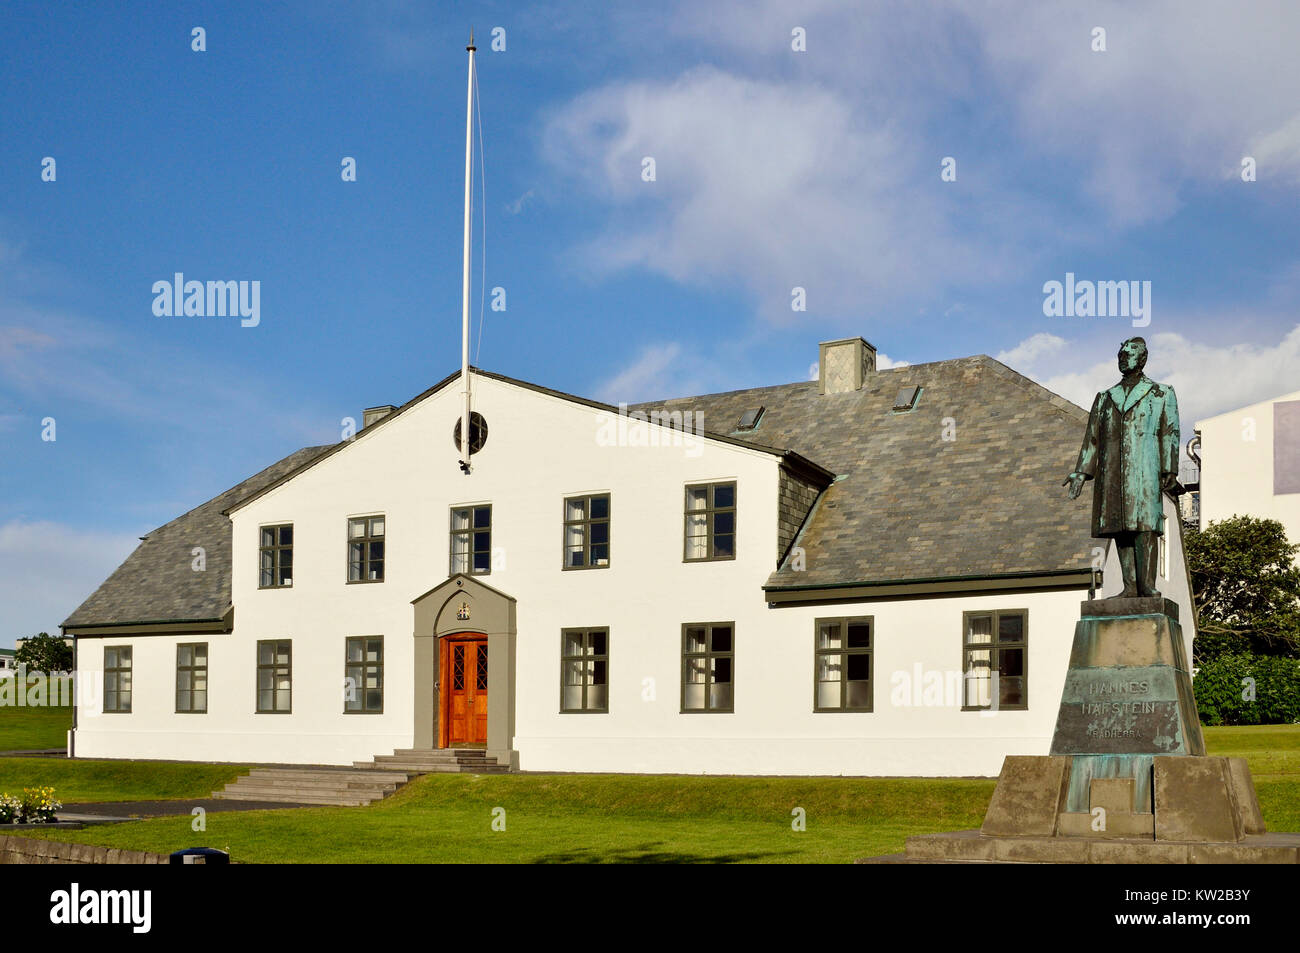 Iceland, Reykjavik, official residence Prime Minister and monument Hannes Hafstein, Island, Reykjavík, Amtssitz Ministerpräsident und Denkmal Hannes H Stock Photo